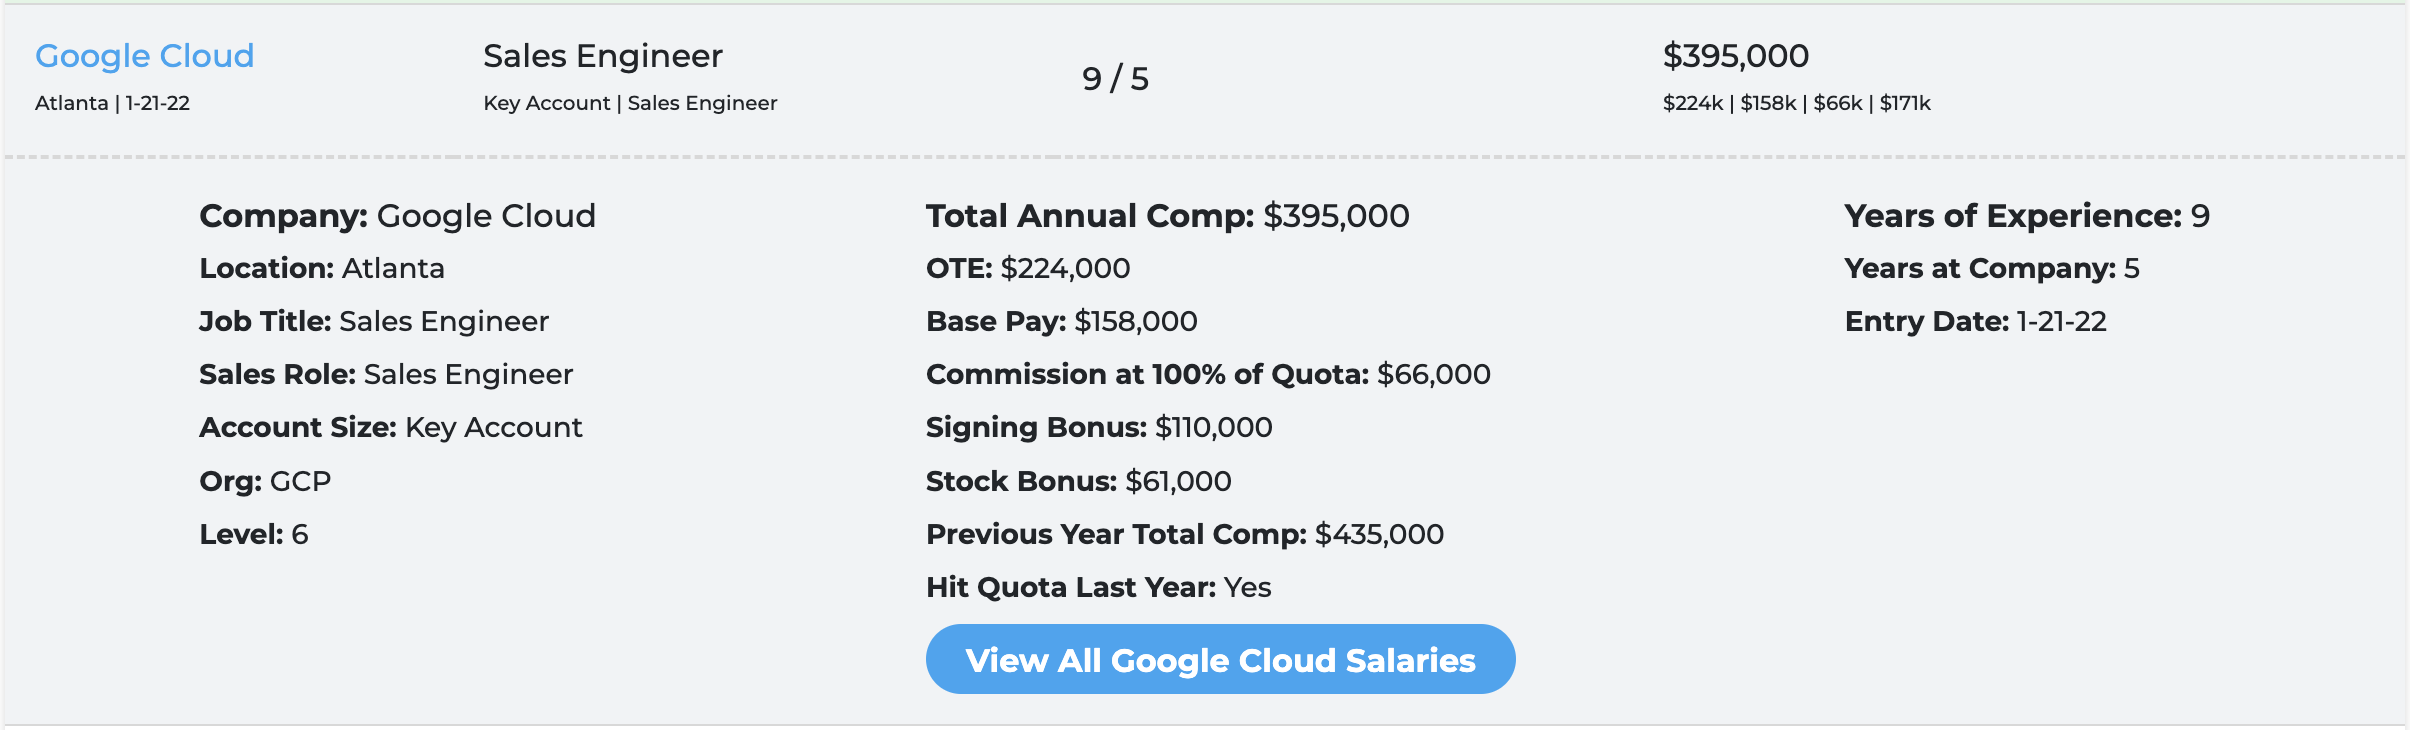 Google Cloud Sales Engineer Compensation Entry Screenshot